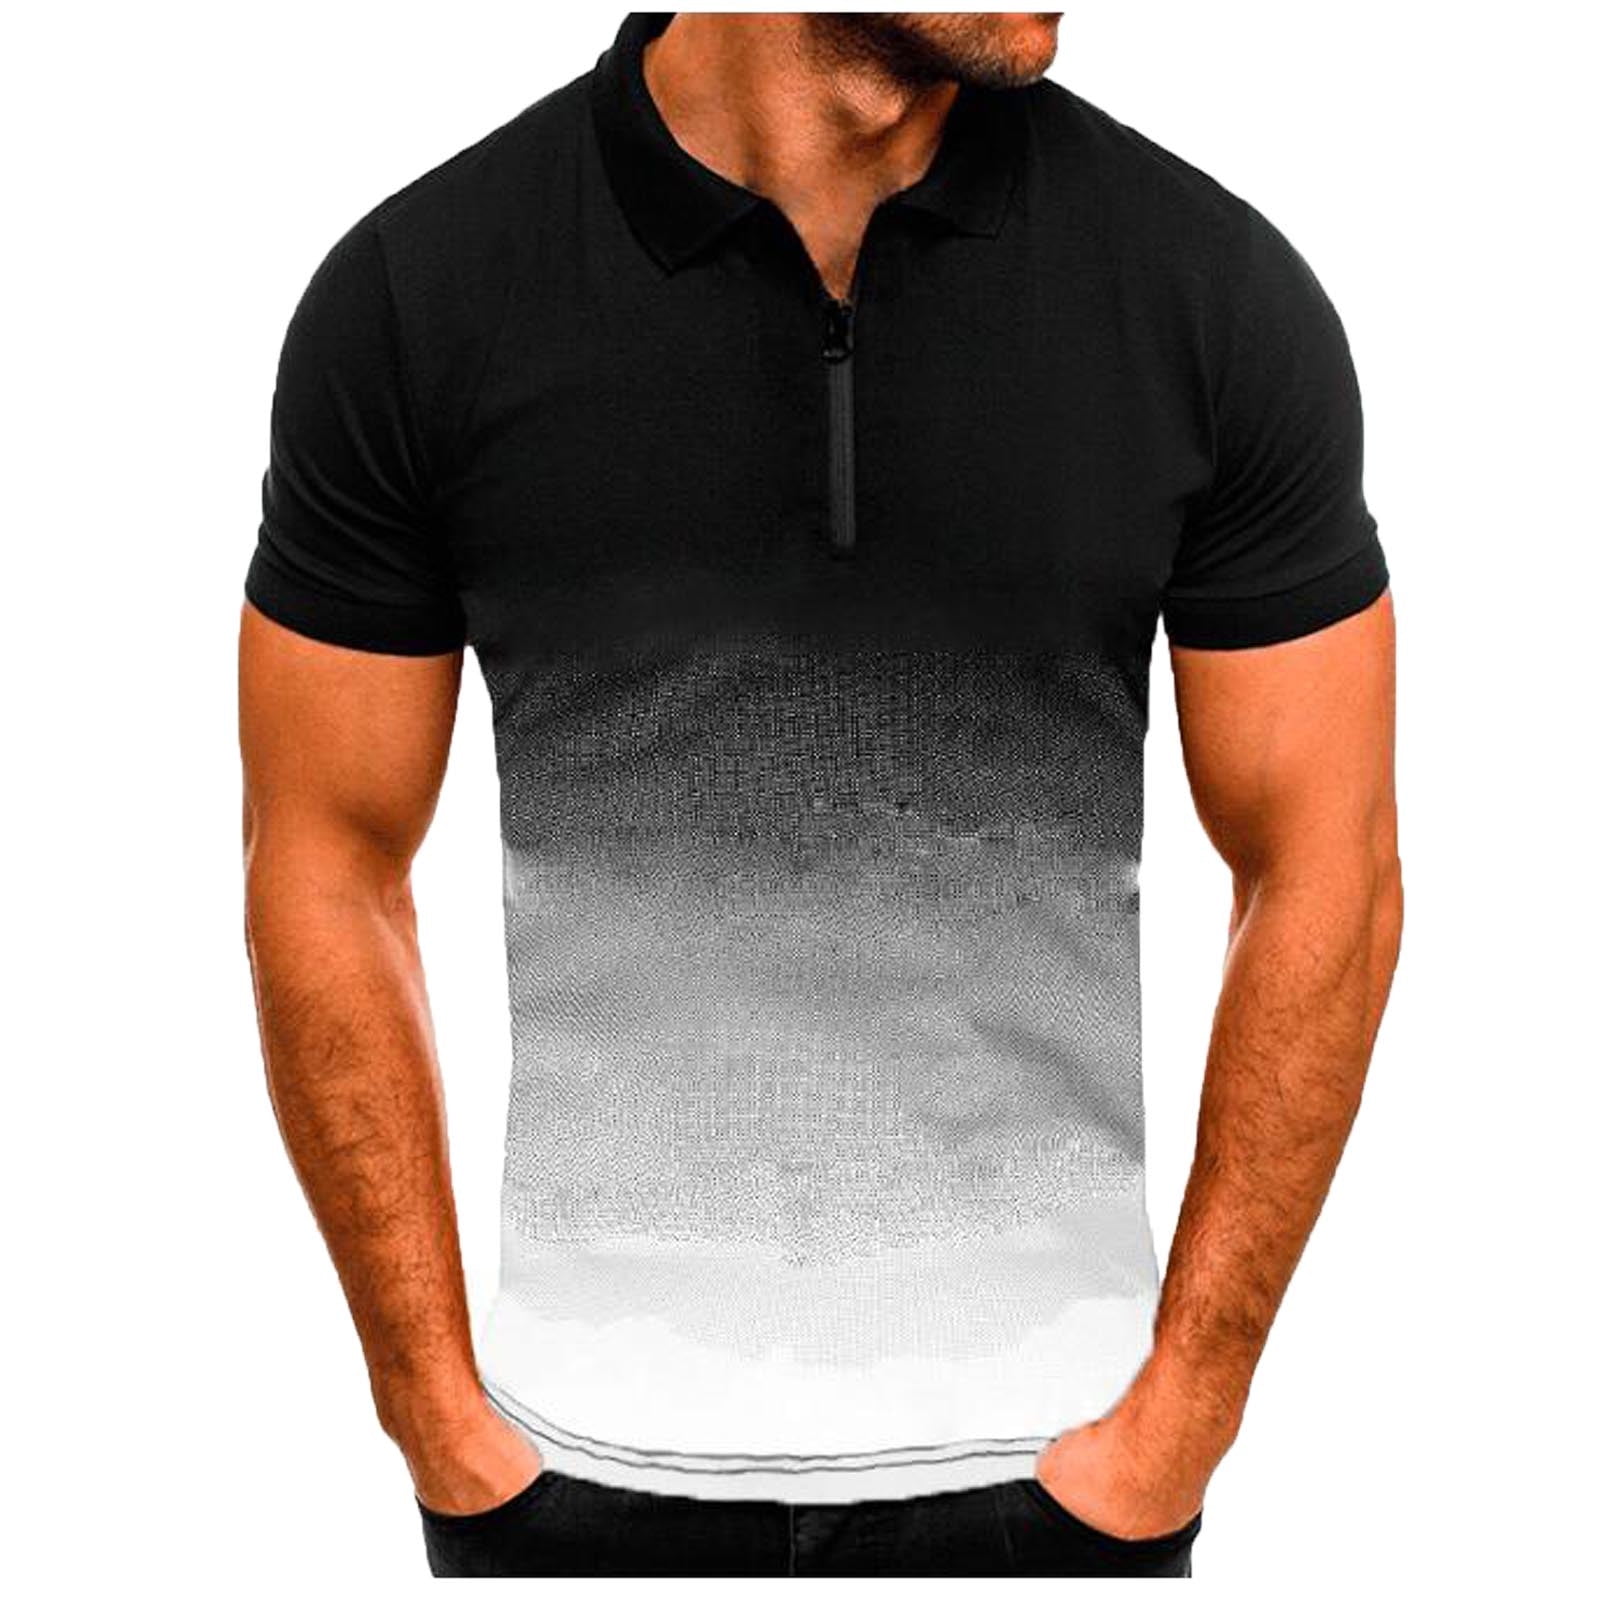 Cotton Black Mens Dot Printed Half Sleeve T-Shirt, Size: S-XL